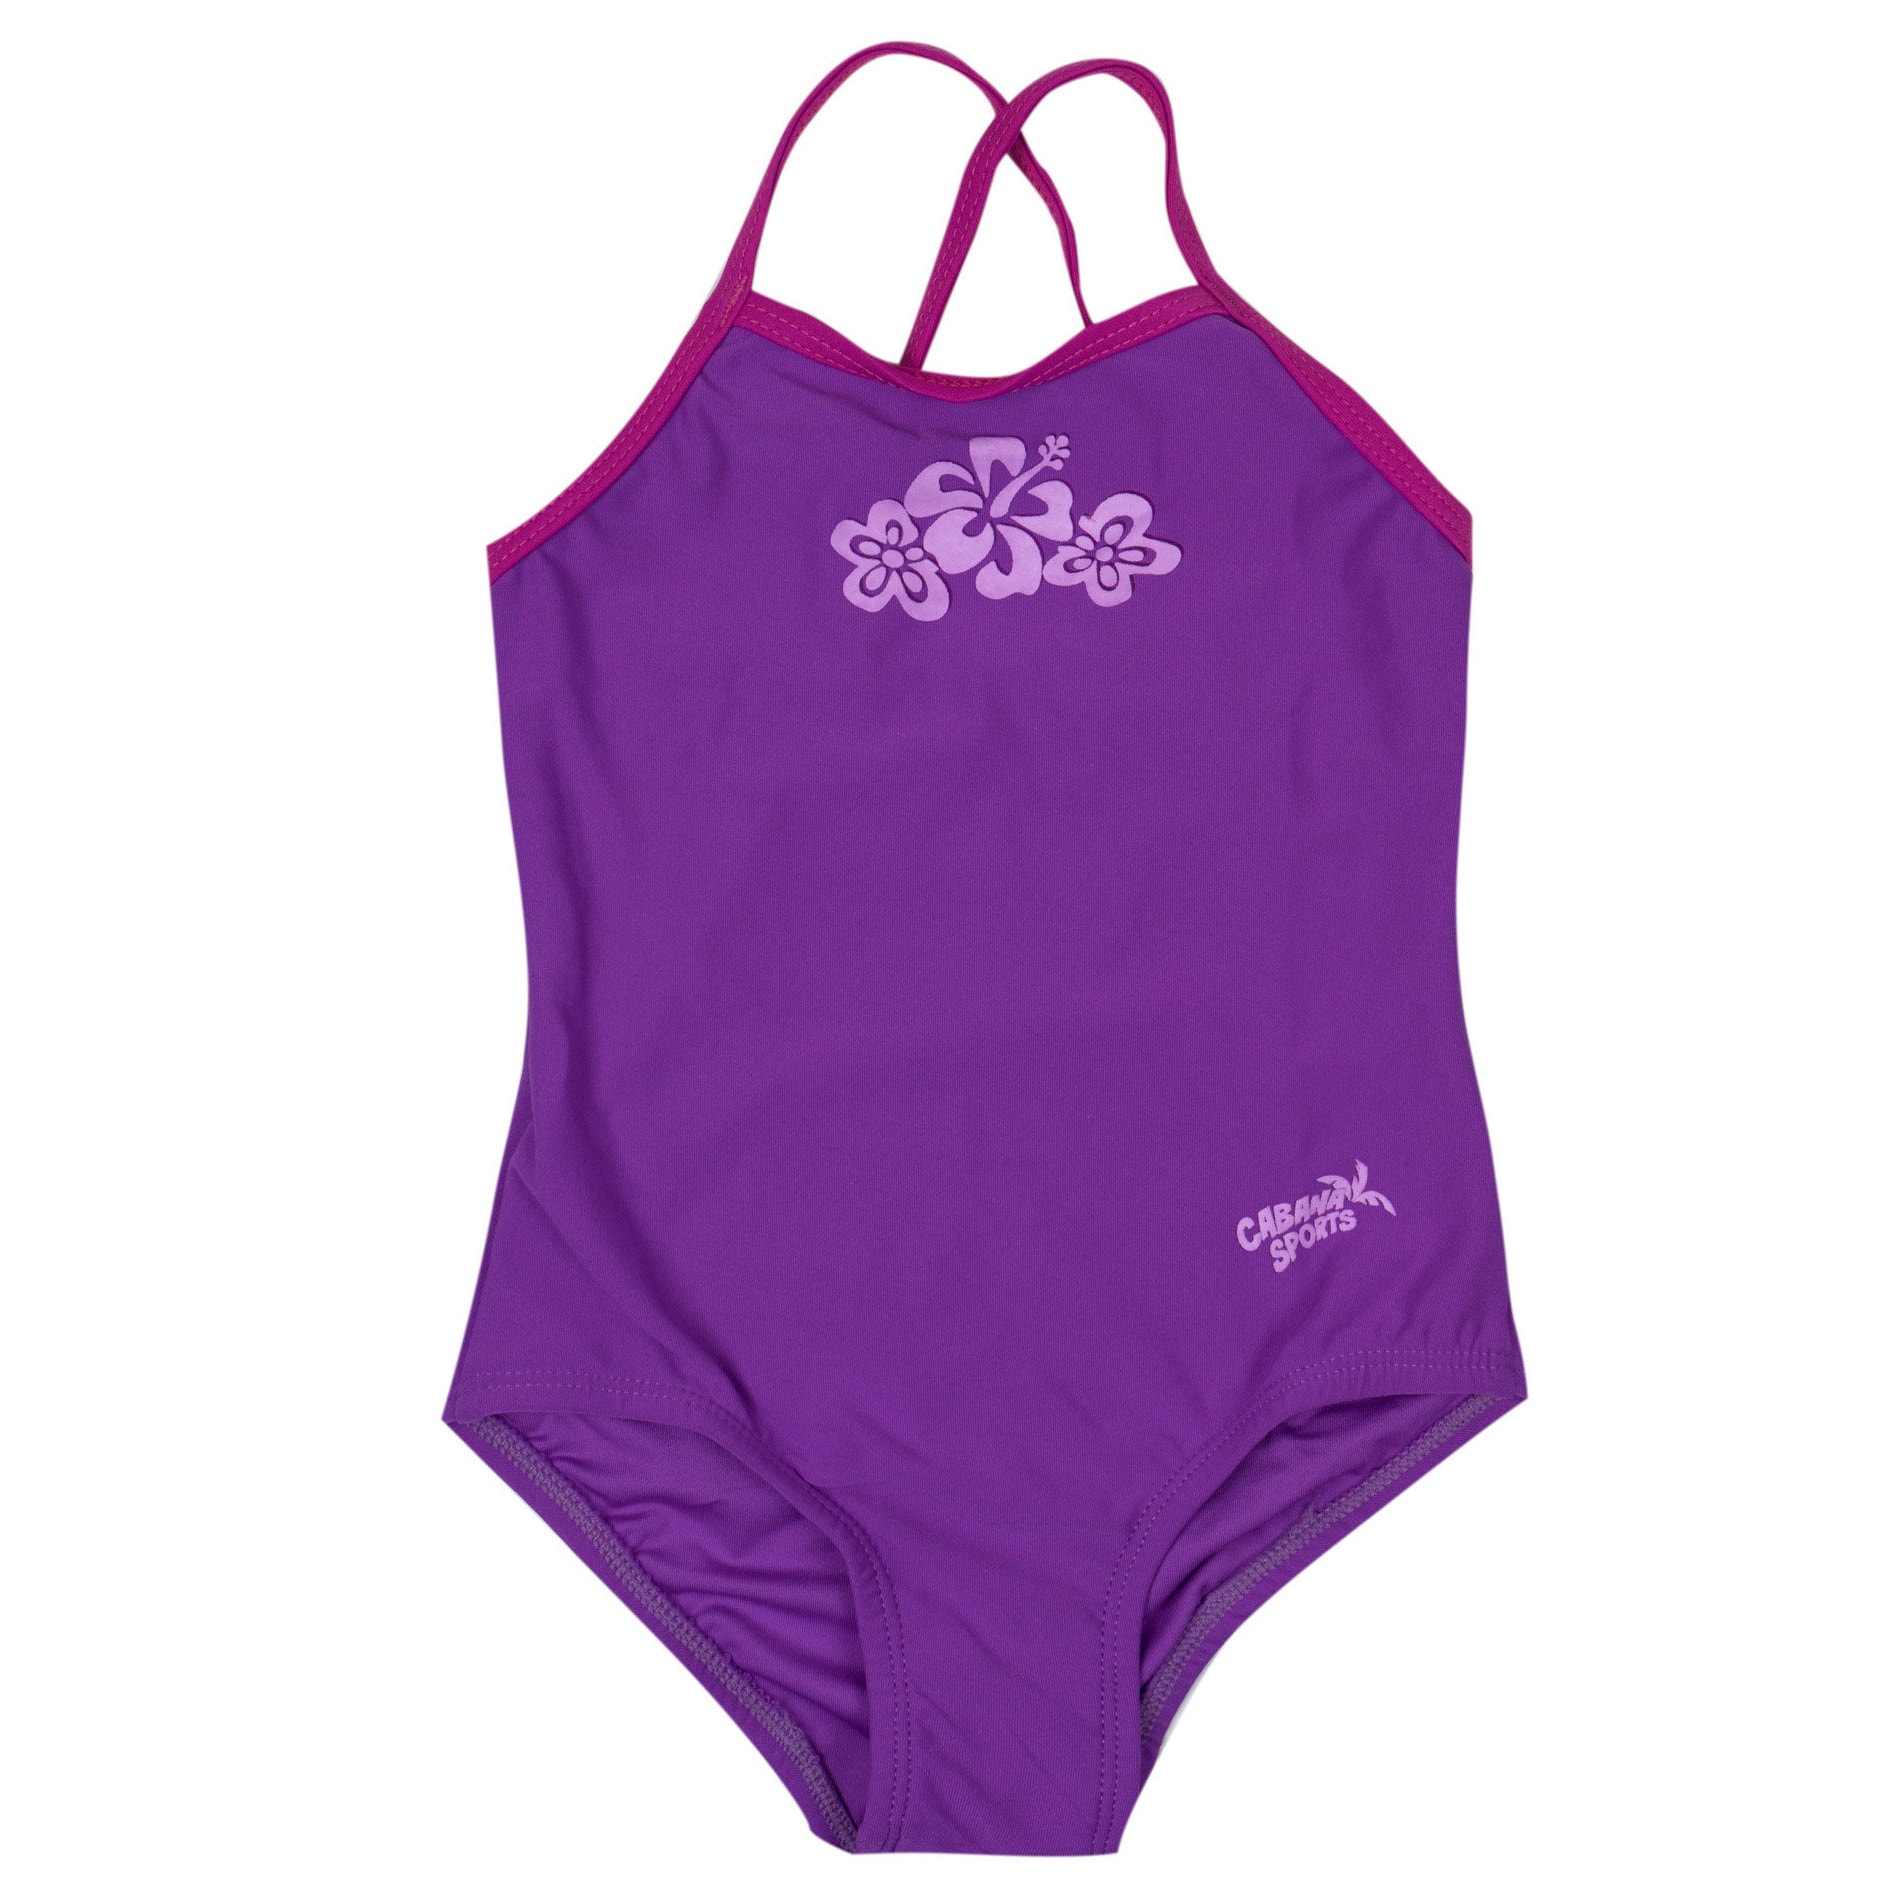 BNWT Girls Sz 7 Smart Purple/Pink Full Back One Piece Swim Suit Bathers UPF 50+